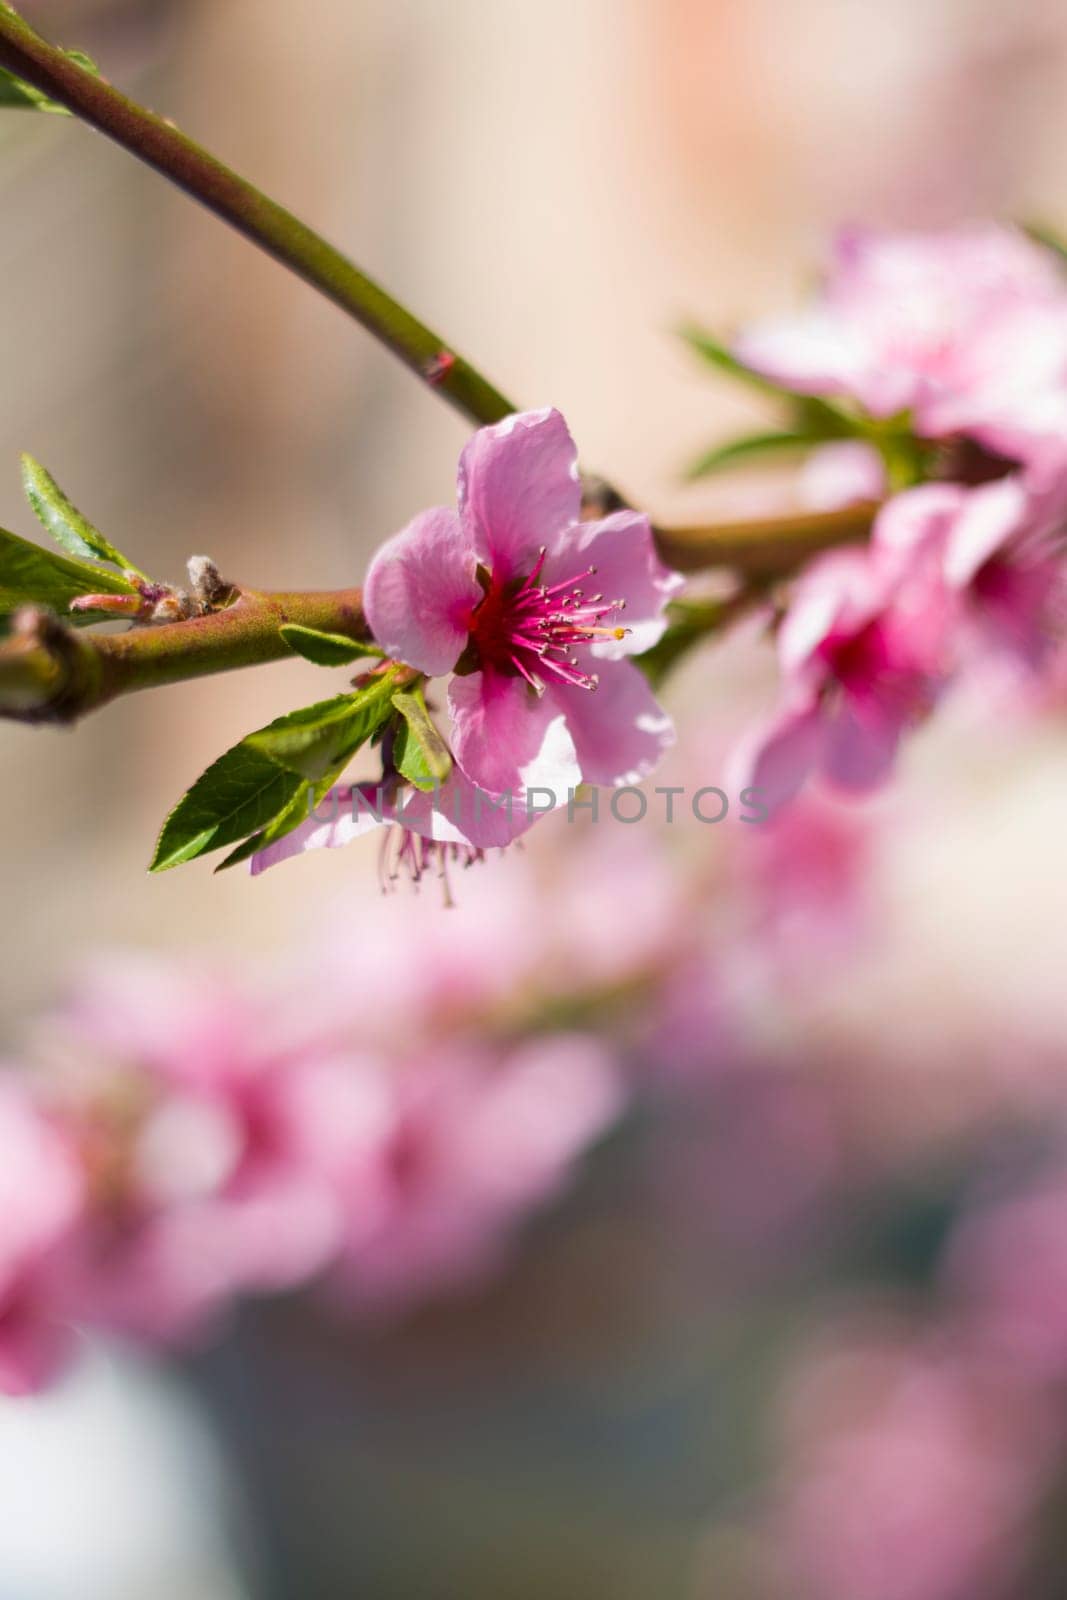 Spring peach nectarine flower blossom on branch. Agriculture beautiful season farming springtime landscape